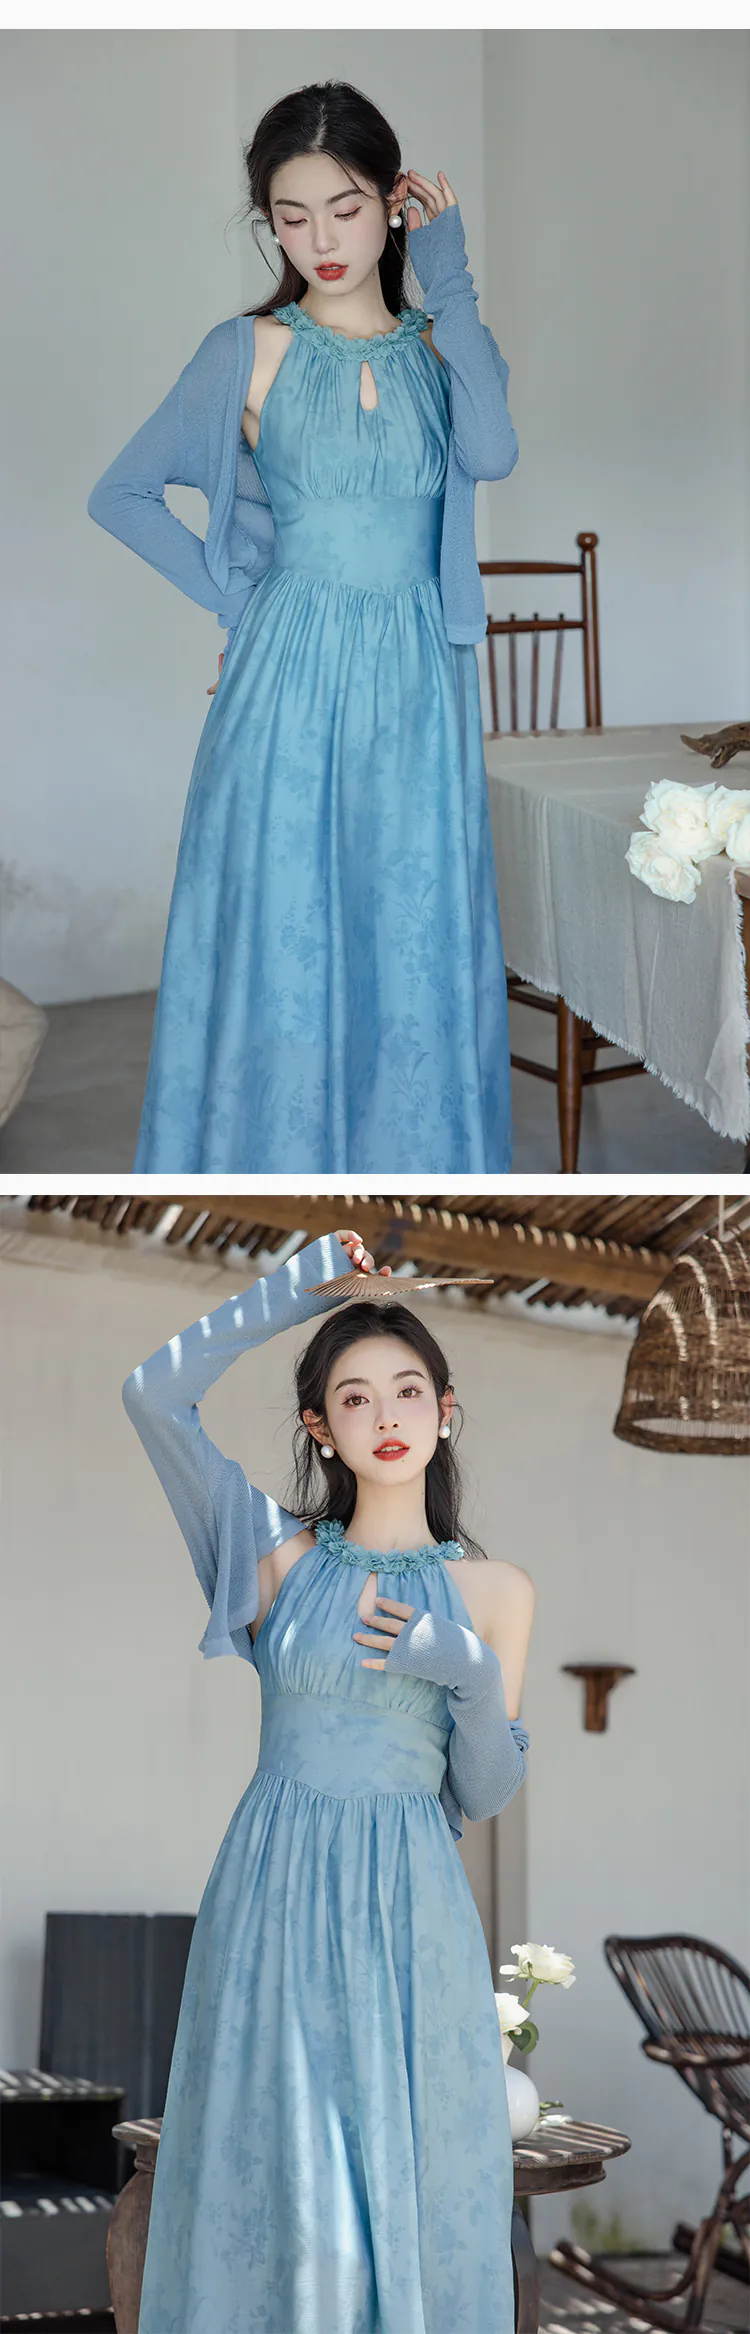 Sweet-Soft-Blue-Flower-Printed-Chiffon-Casual-Dress-with-Cardigan-Set14